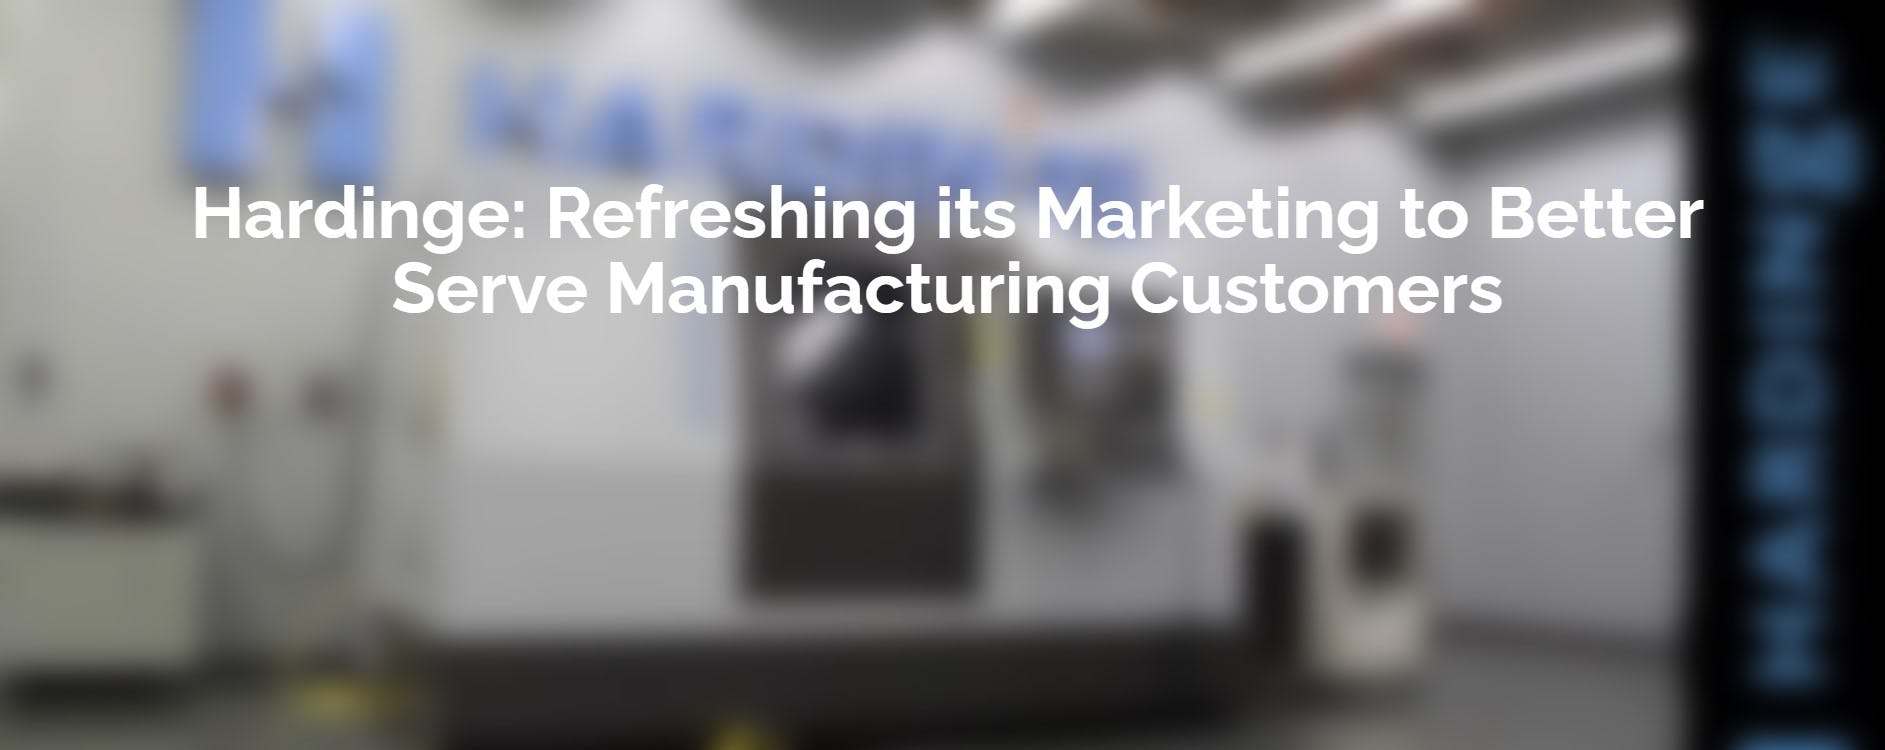 Hardinge Refreshing Its Marketing To Better Serve Manufacturing Customers